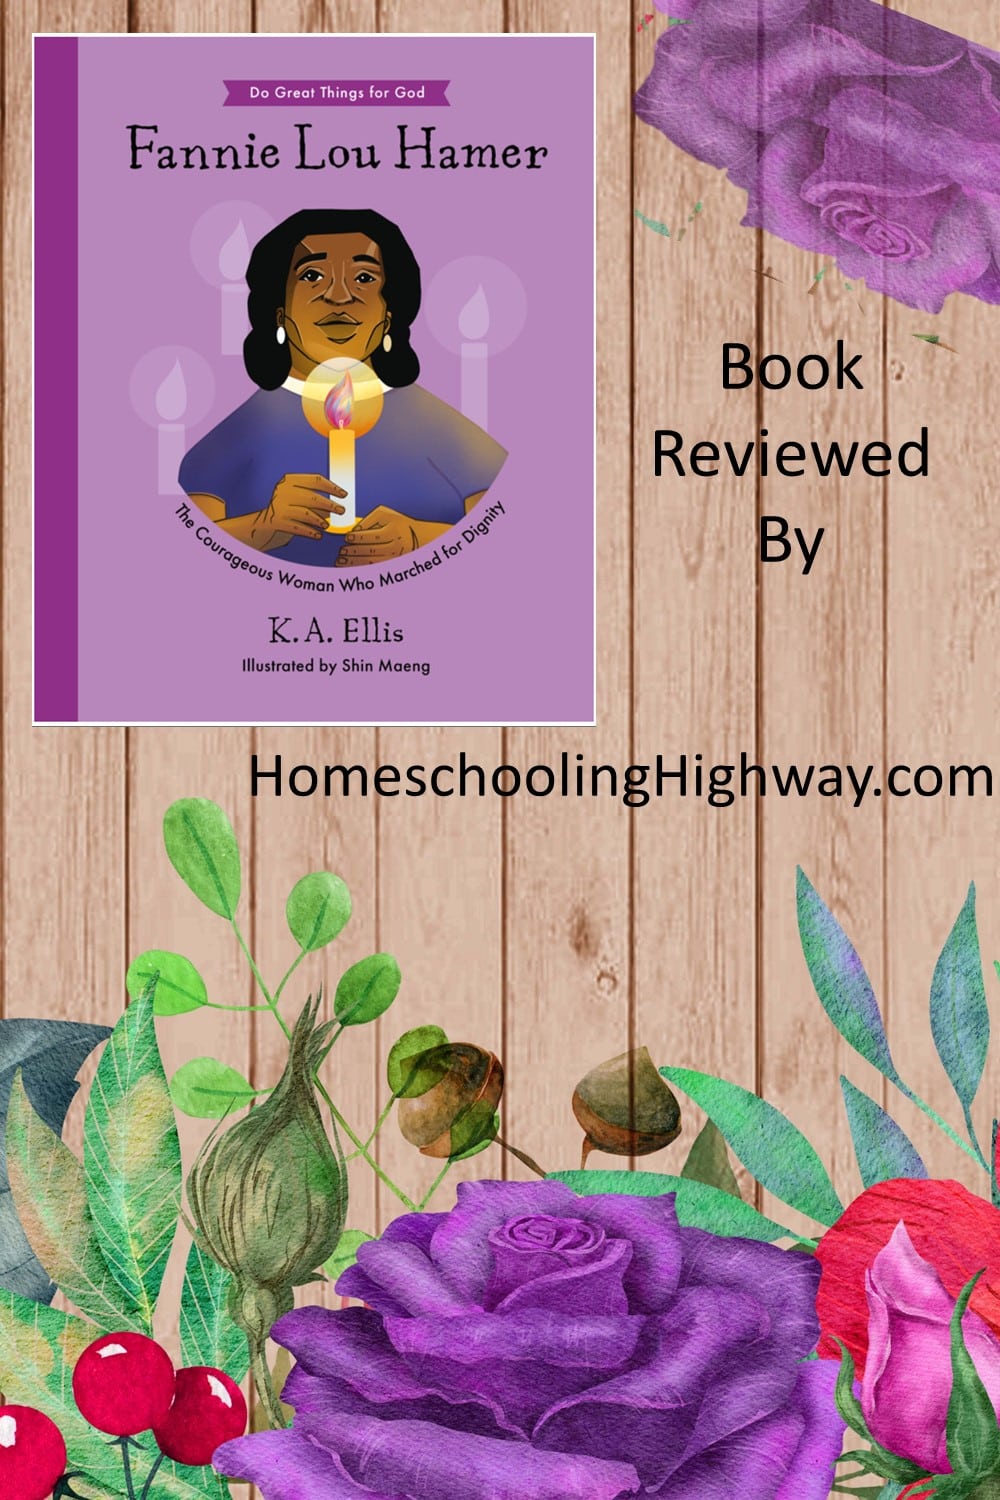 Fannie Lou Hamer. Written by K.A. Ellis. Reviewed by HomeschoolingHighway.com